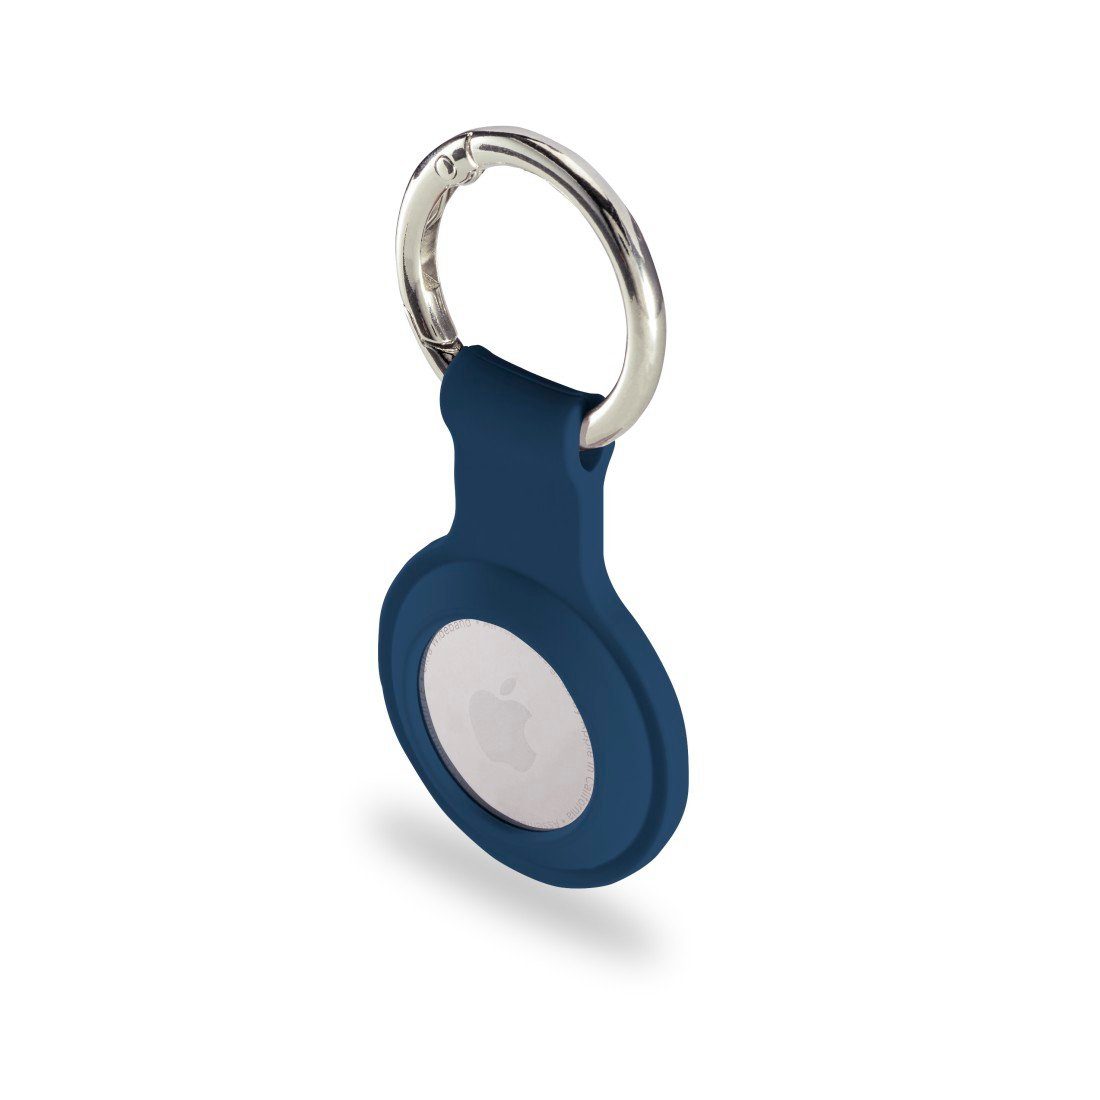 Silikon für Schlüsselanhänger dunkelblau AirTag, Apple Schlüsselanhänger Schutzhülle, Ortung, Hama